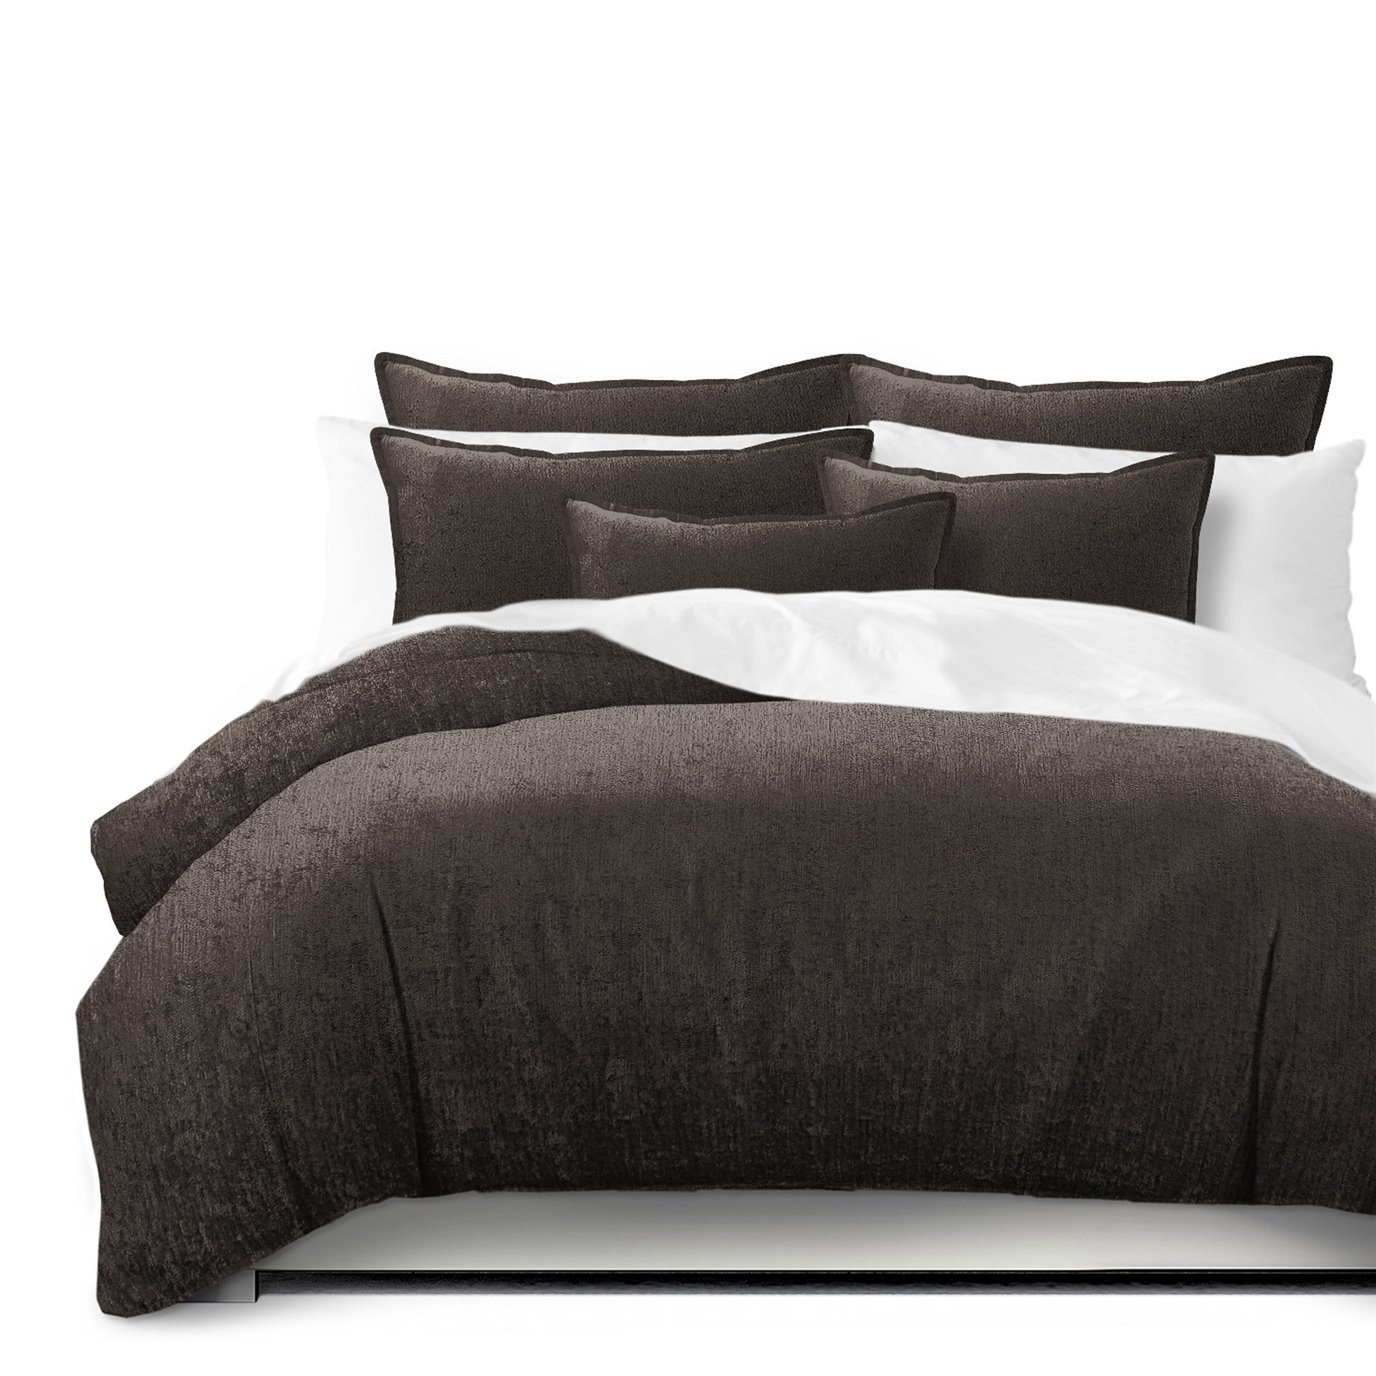 Juno Velvet Chocolate Comforter and Pillow Sham(s) Set - Size Super King